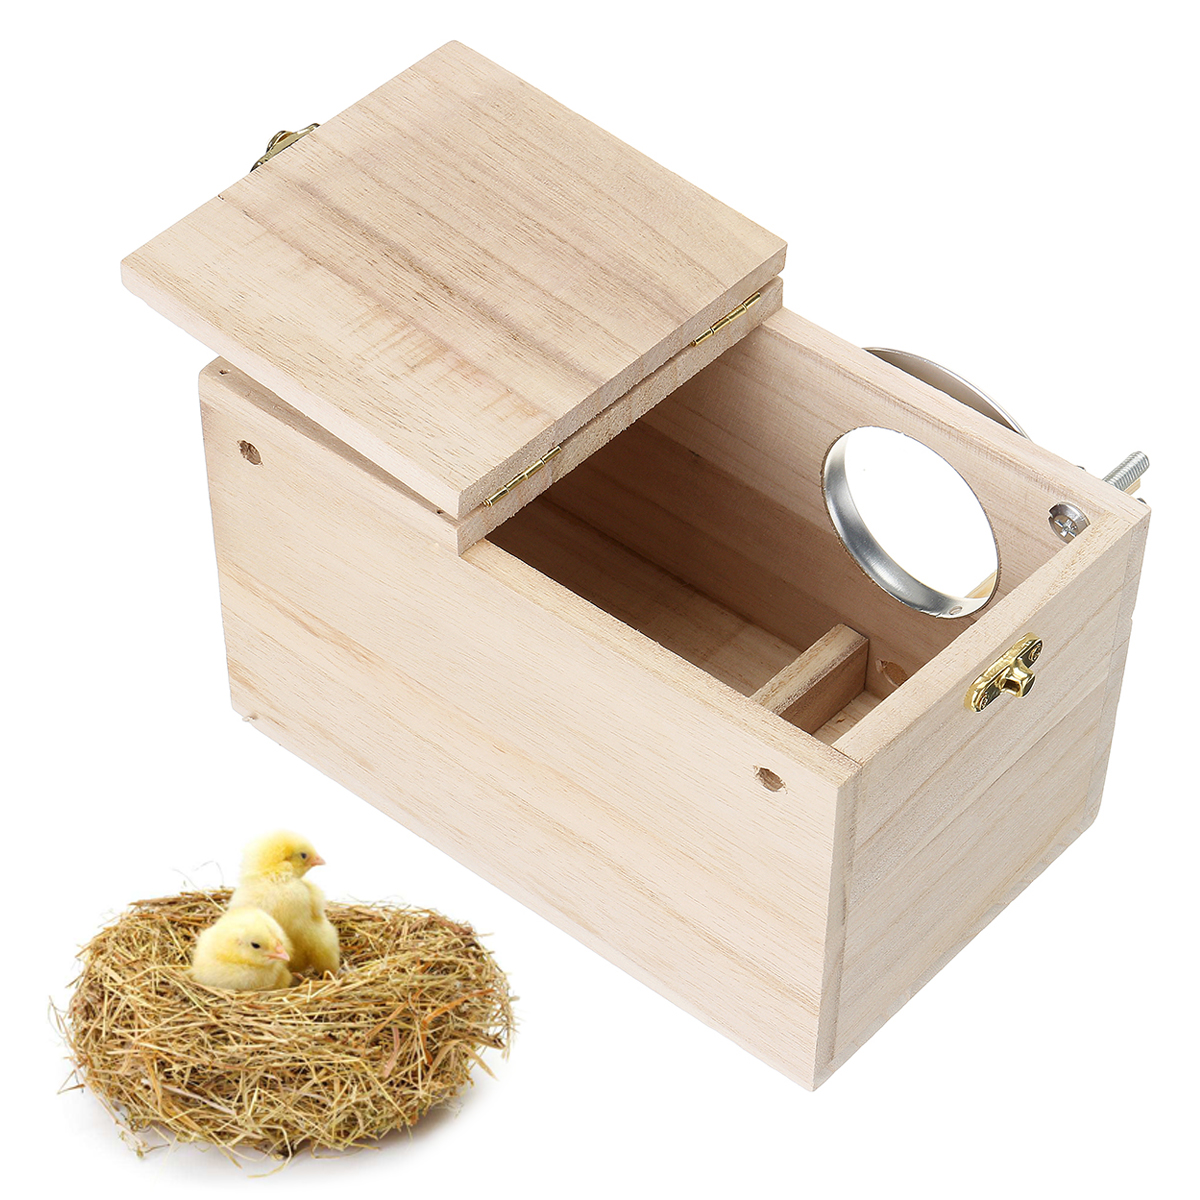 Budgie Nest Wooden Box Breeding Boxes Aviary Bird House Nesting w/ Stick Window Security